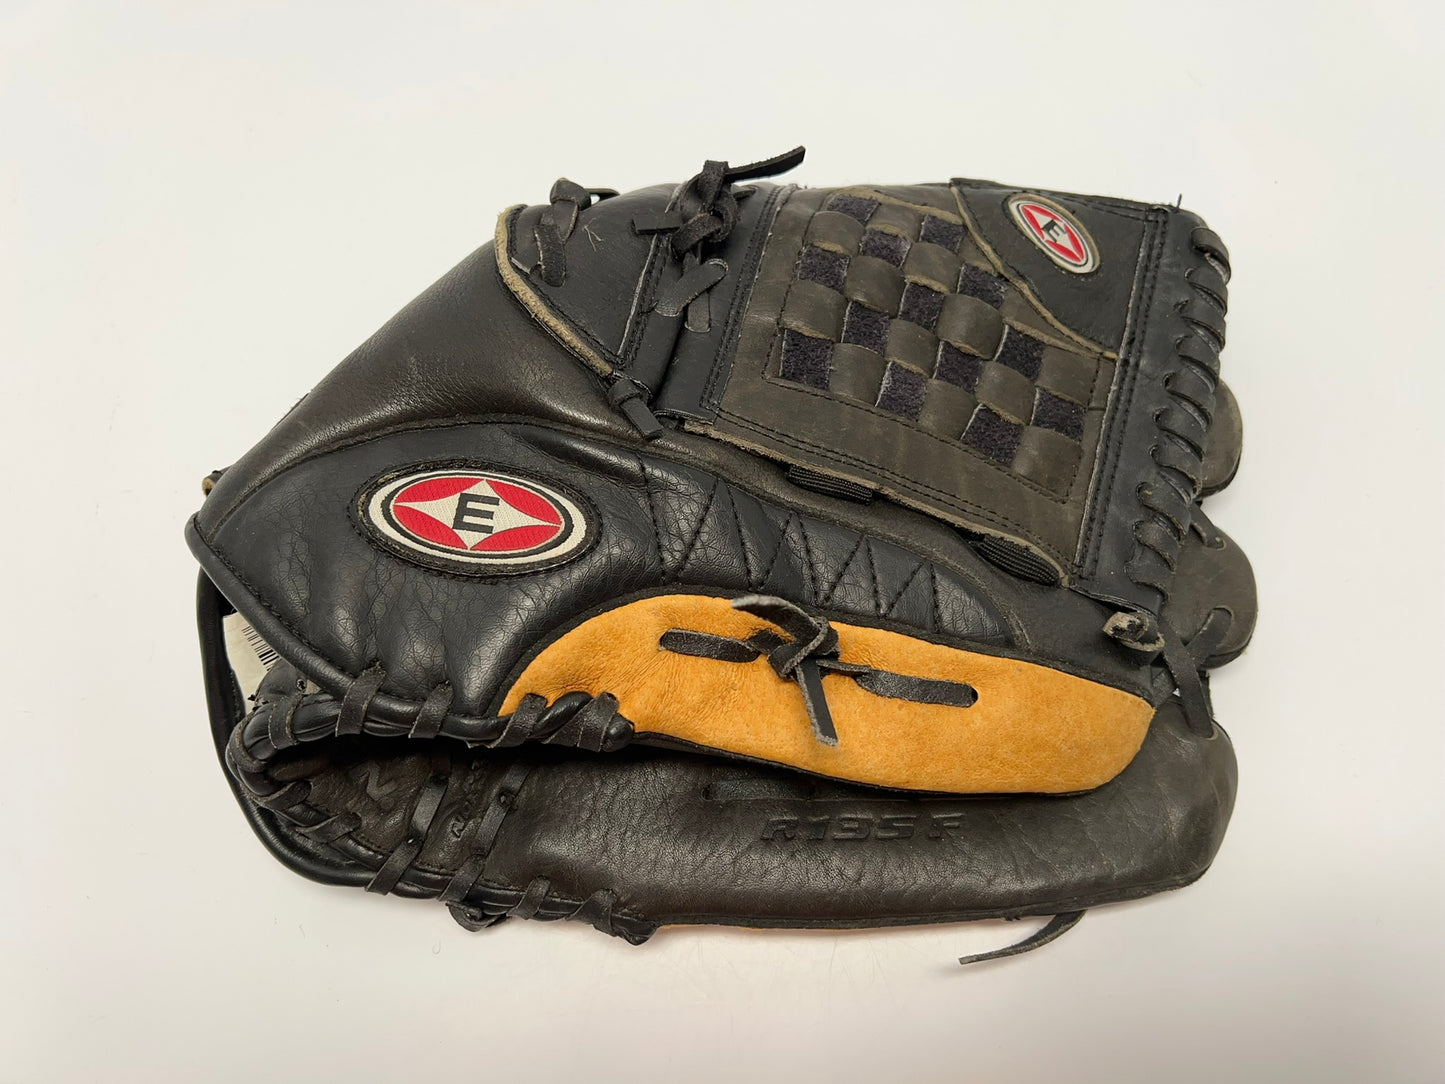 Baseball Glove Adult Size 13.5 Easton Soft Leather Black Tan Excellent